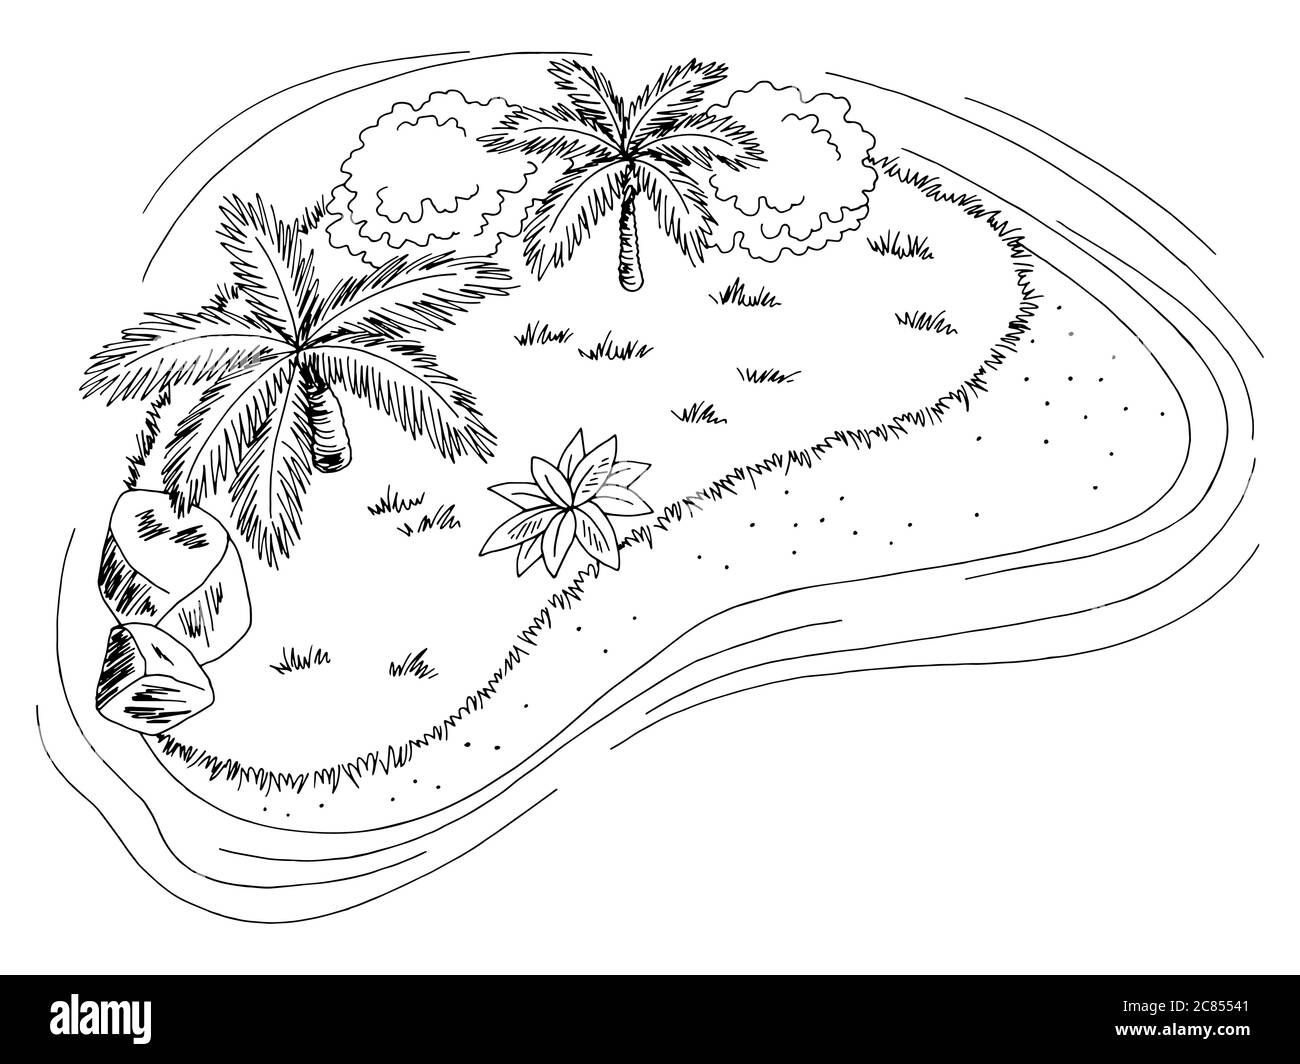 Insel oben Luftbild Grafik schwarz weiß Landschaft Skizze Illustration Vektor Stock Vektor